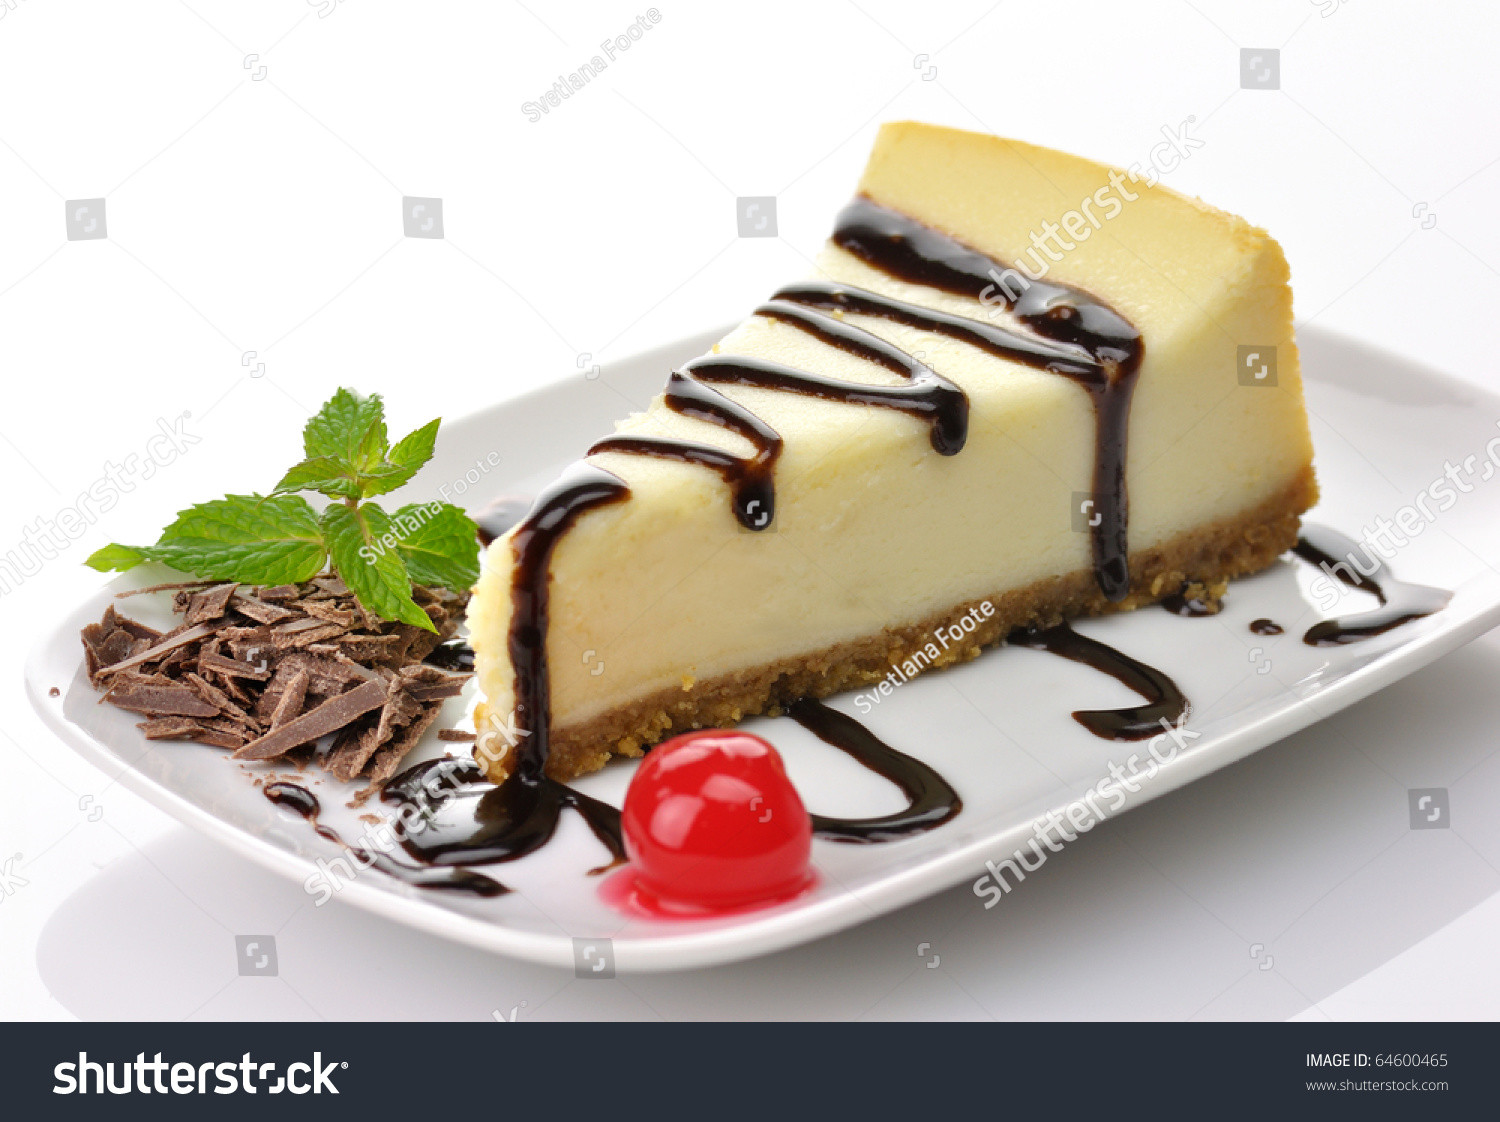 Chocolate Sauce For Cheese Cake
 Cheesecake With Chocolate Sauce Stock